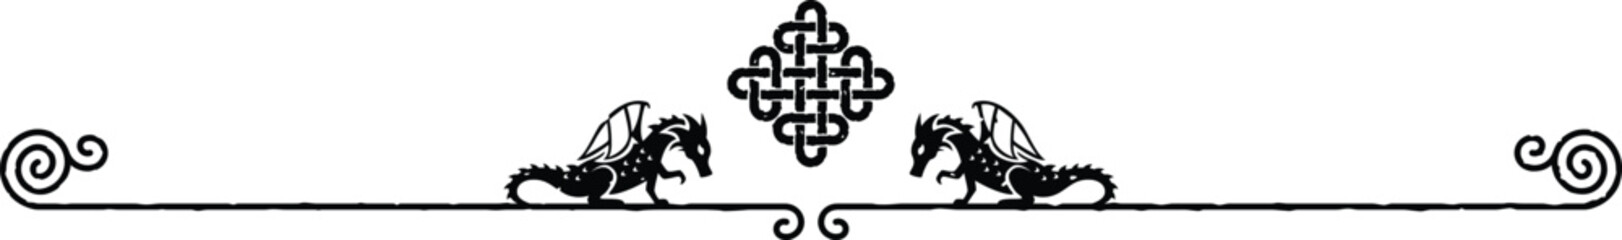 Elegant Header Footer - Dragons and Celtic Knot